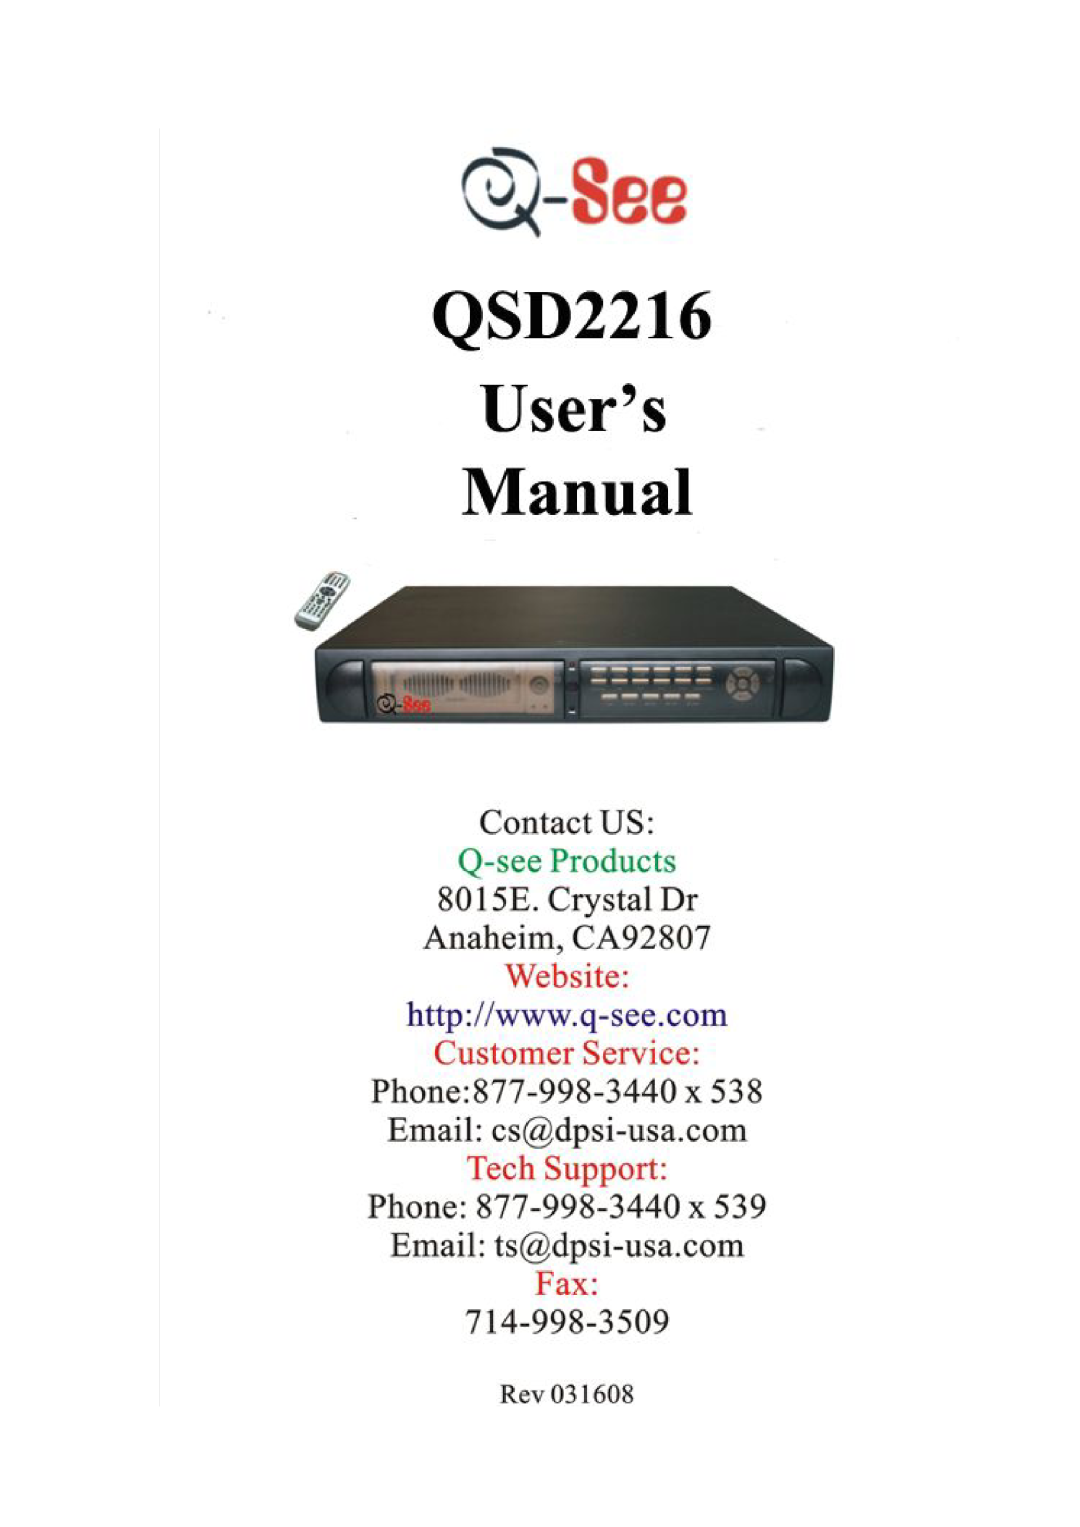 Q-See QSD2216 manual 